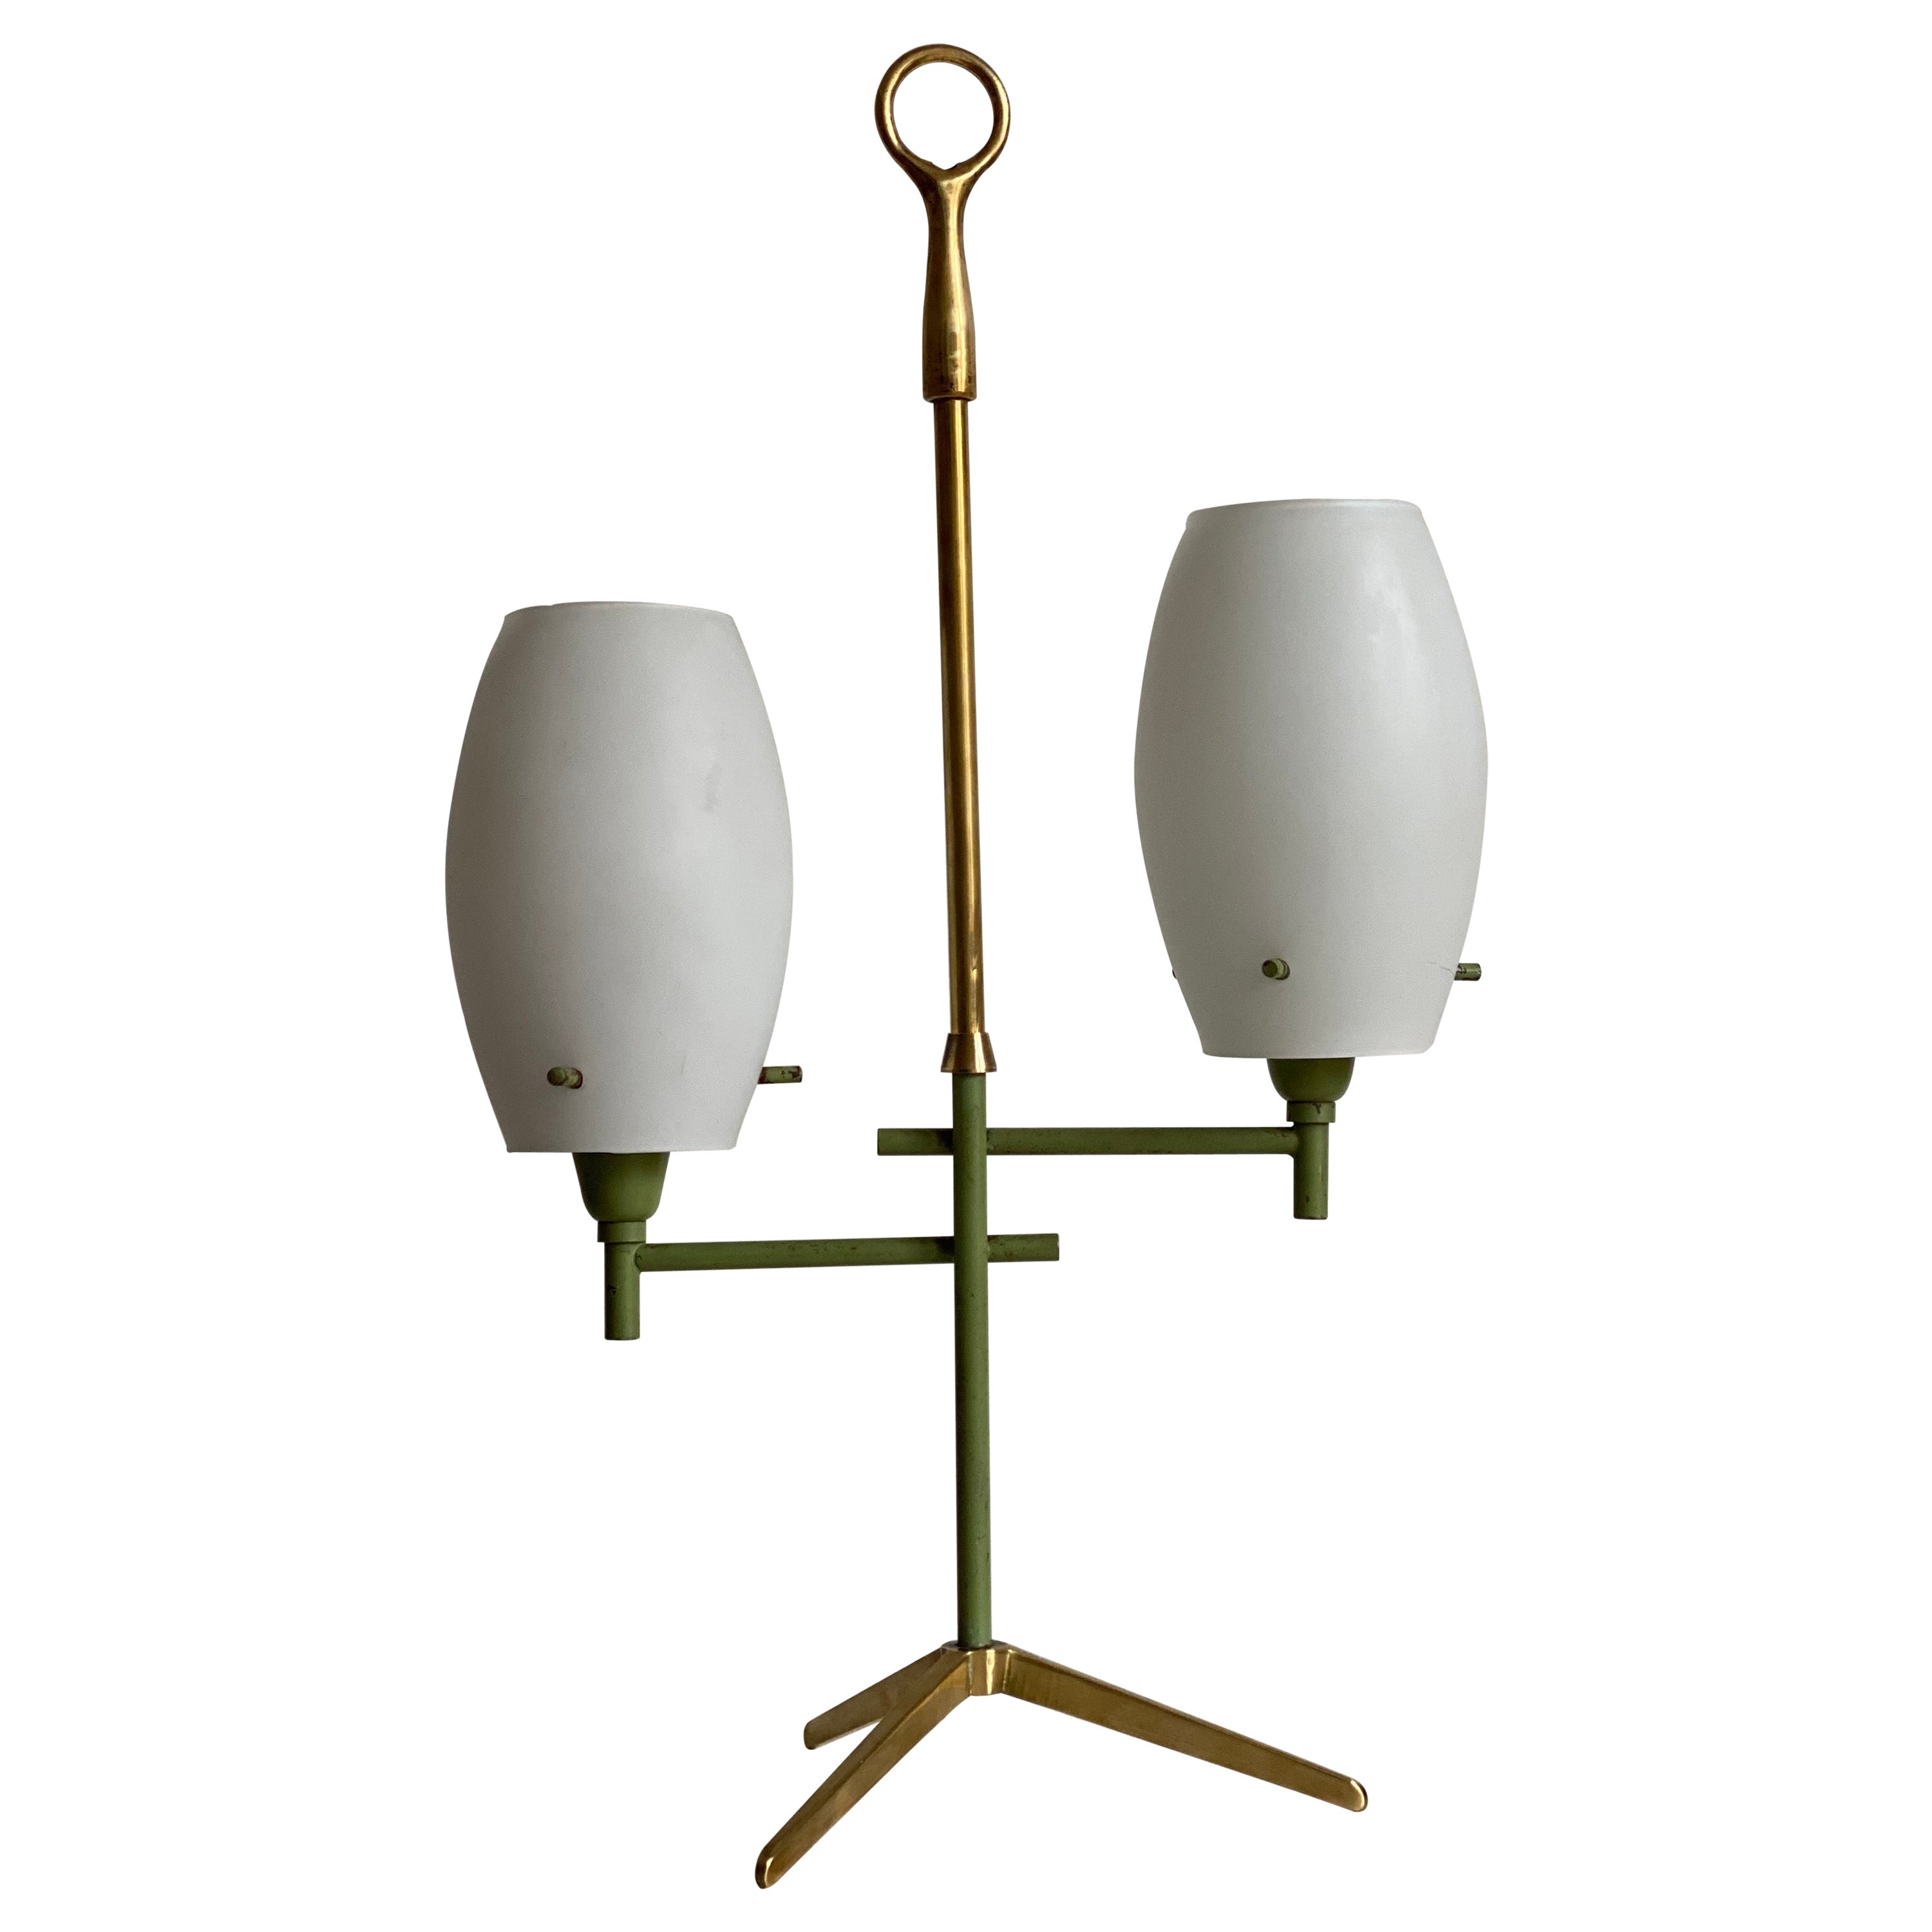 Arredoluce Style Double Orb Table Lamp